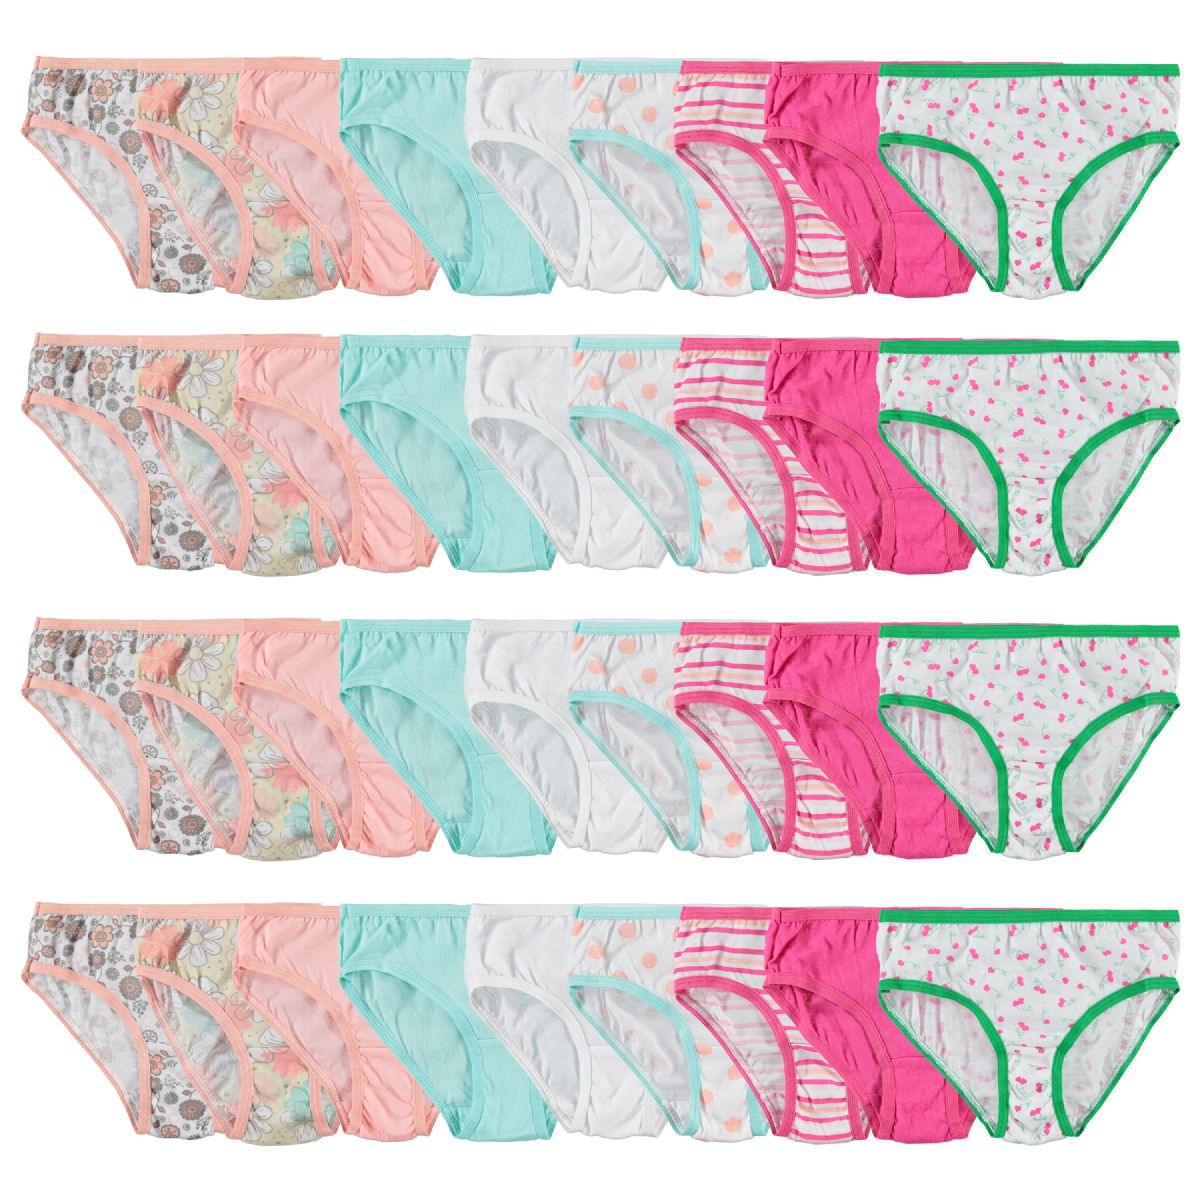 72 Wholesale Girls Cotton Blend Assorted Printed Underwear Size 6